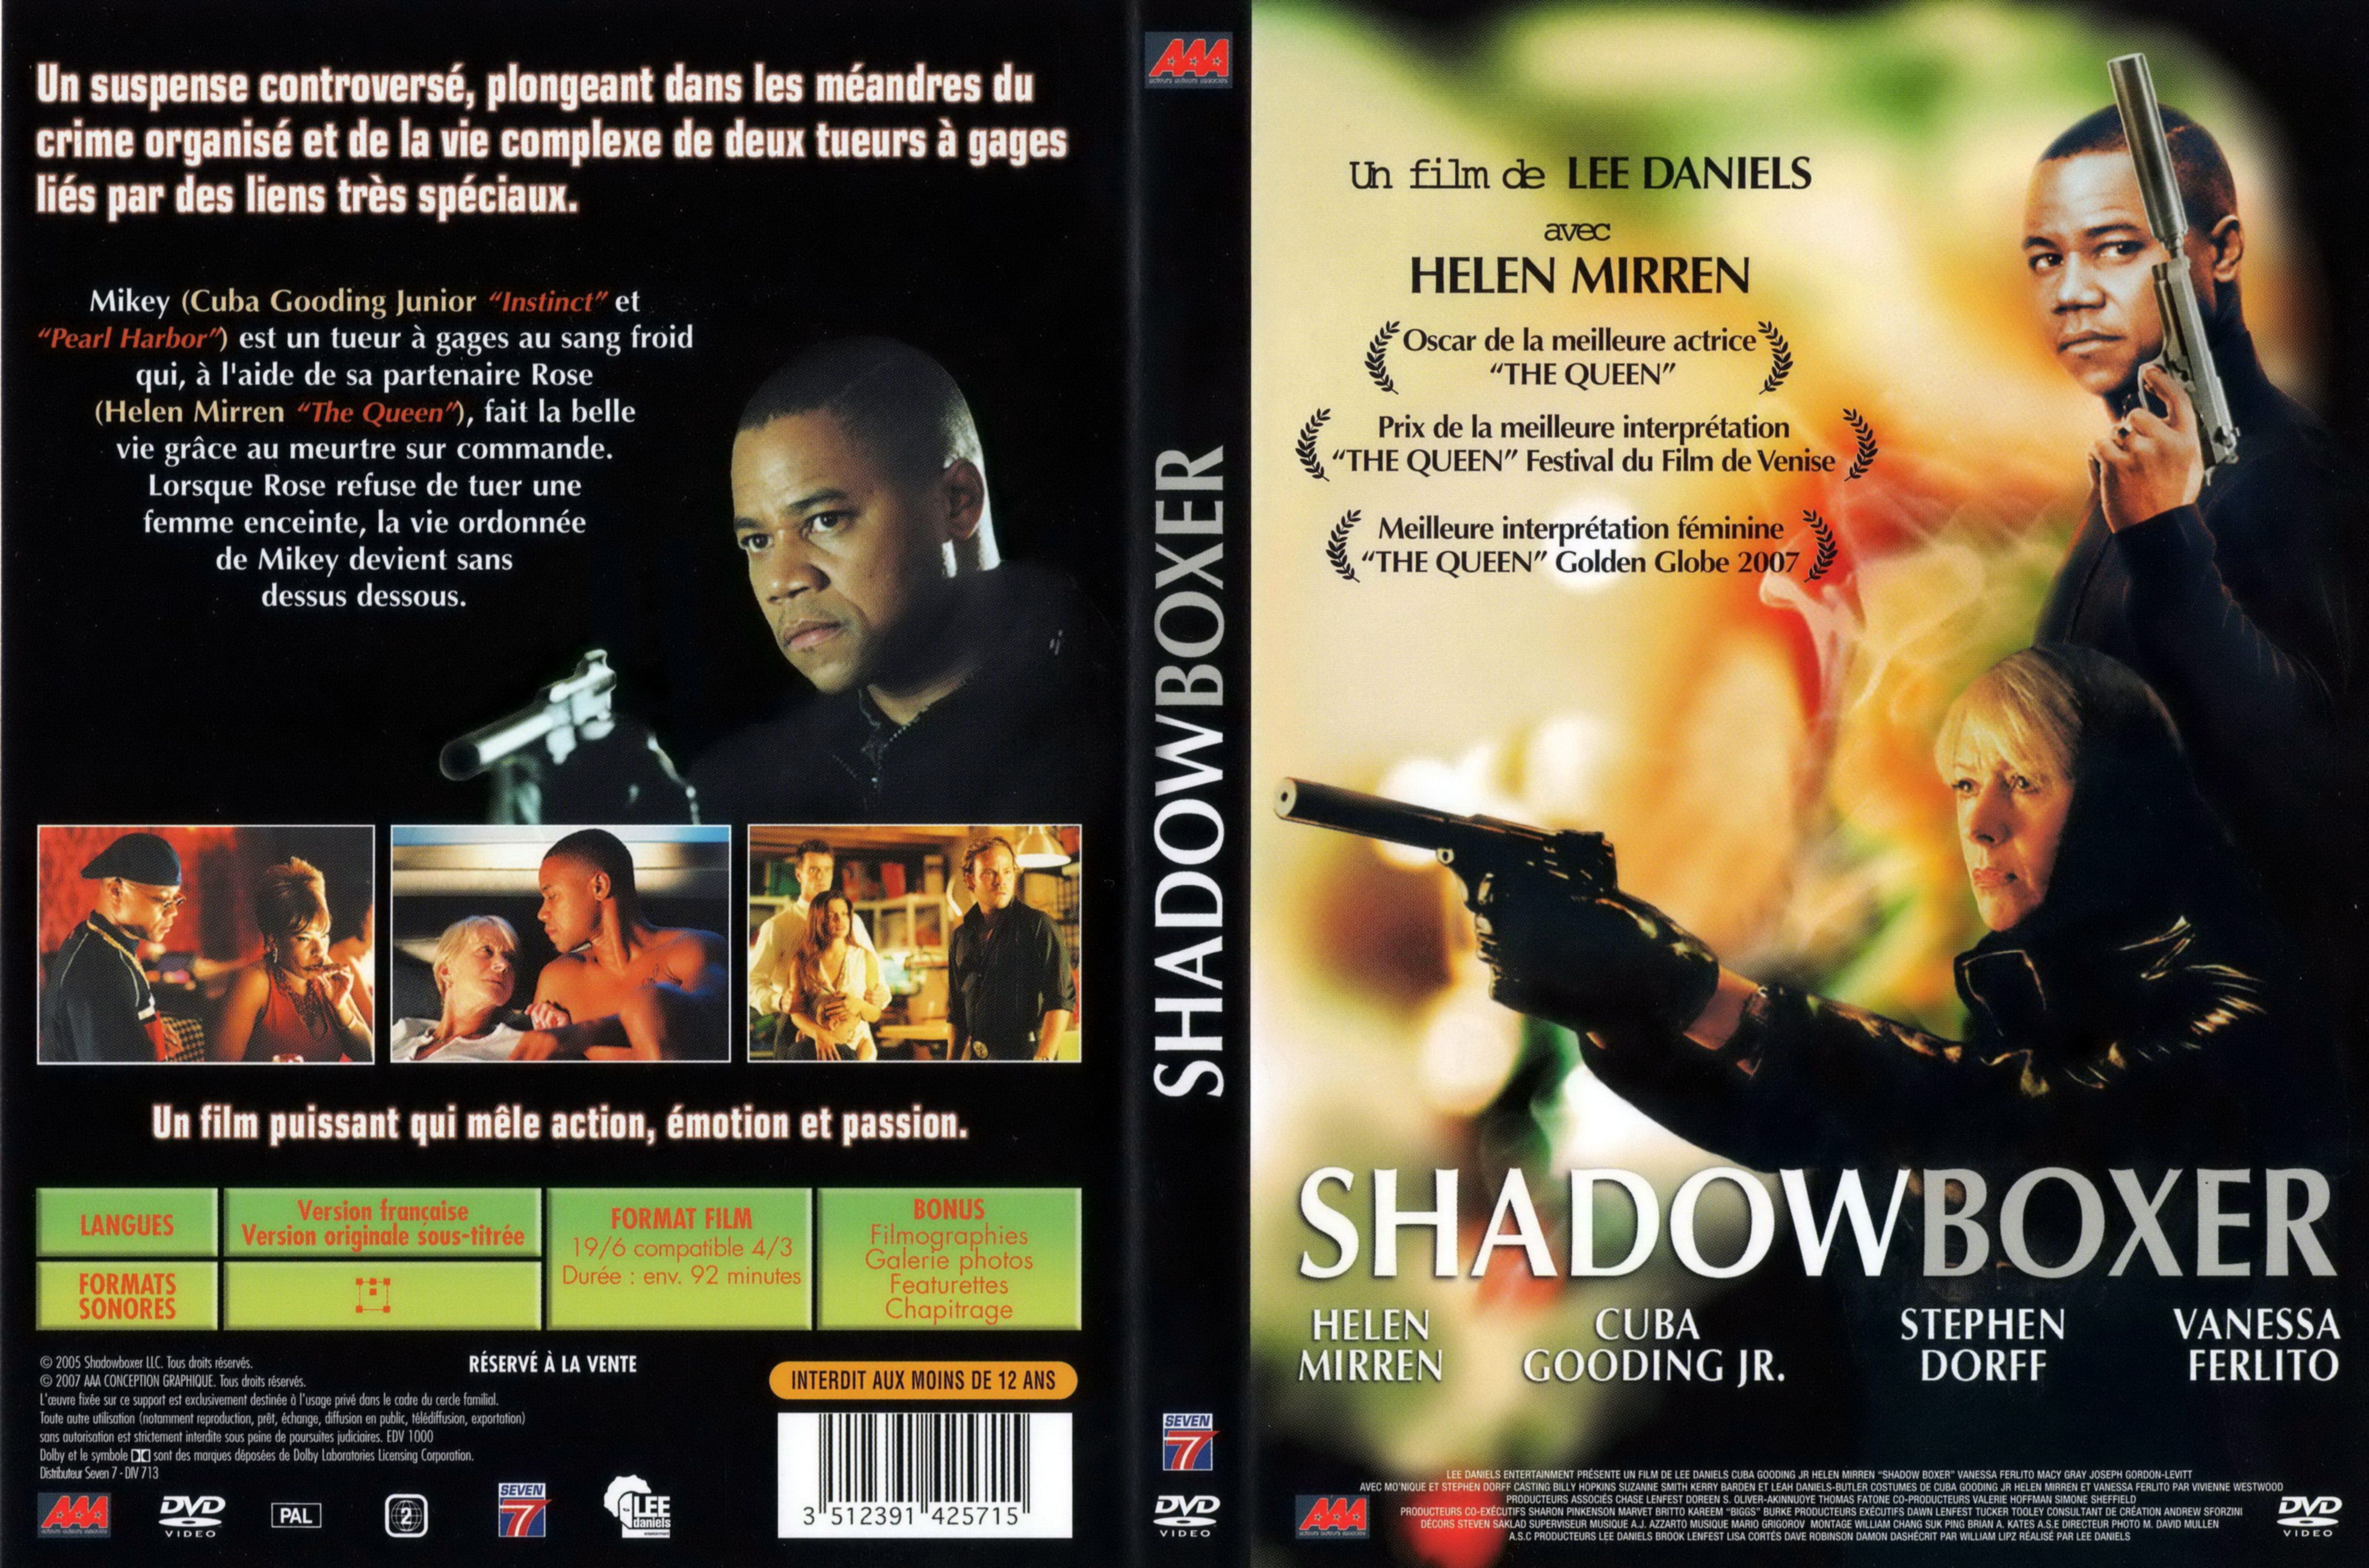 Jaquette DVD Shadowboxer